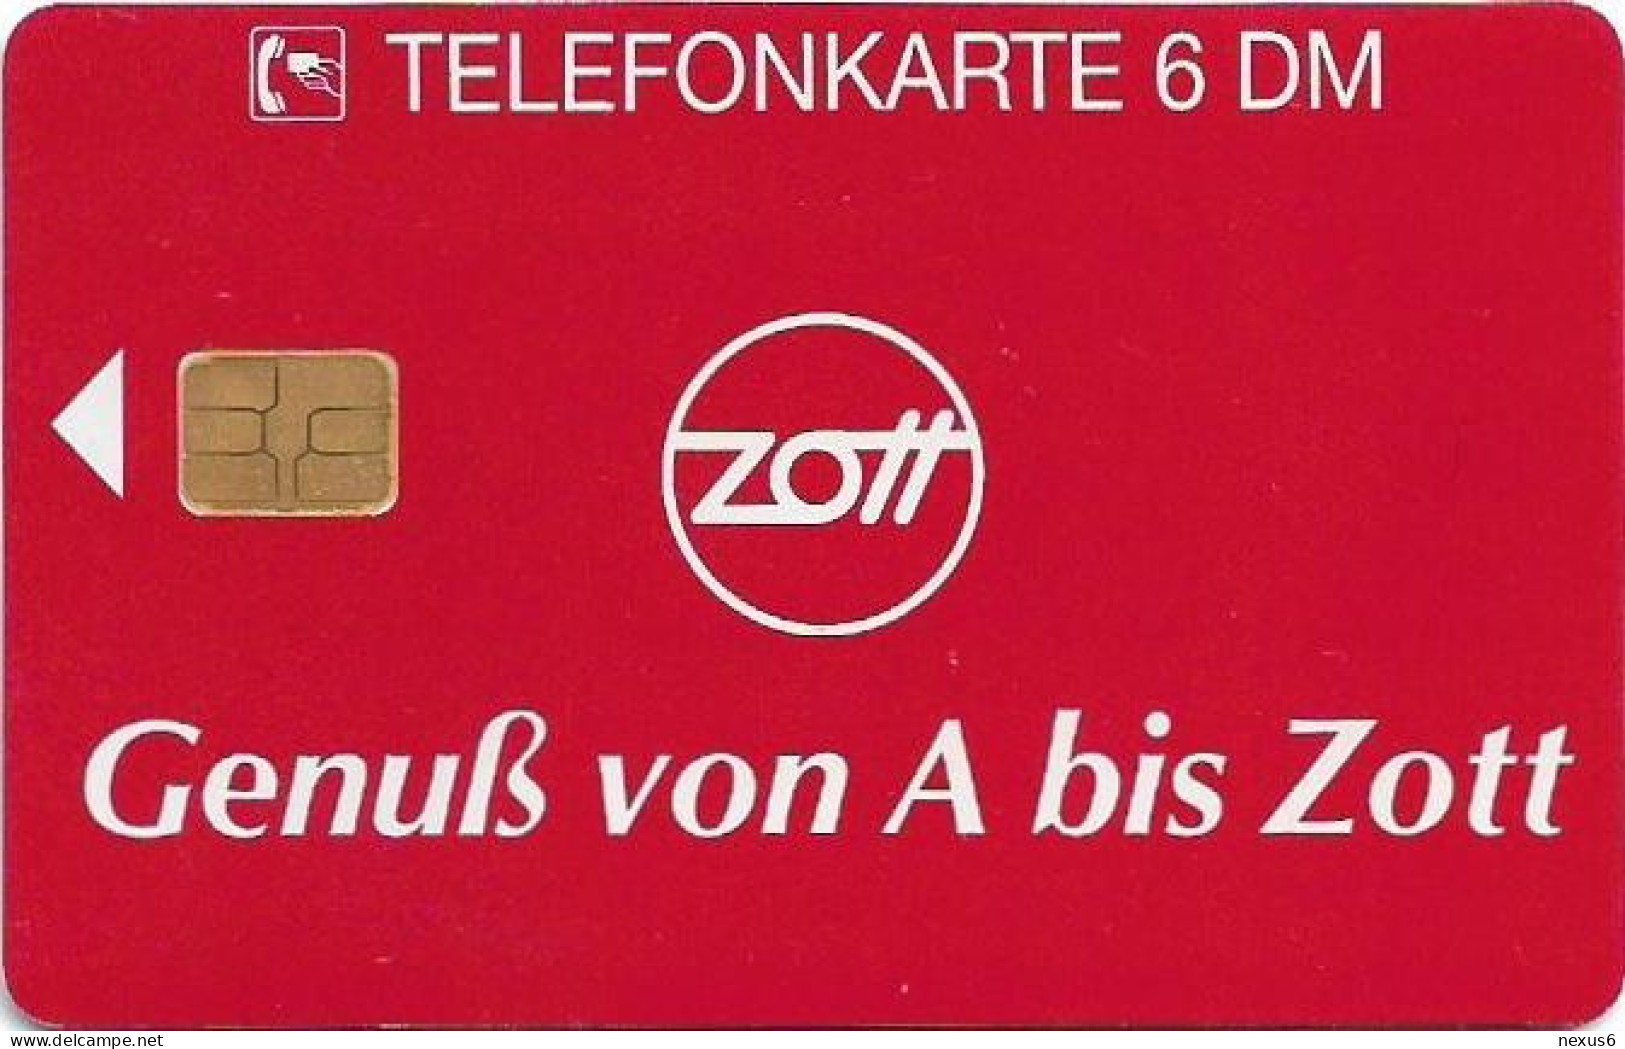 Germany - Zott Joghurt - O 0308 - 03.1995, 6DM, 1.000ex, Mint - O-Series: Kundenserie Vom Sammlerservice Ausgeschlossen